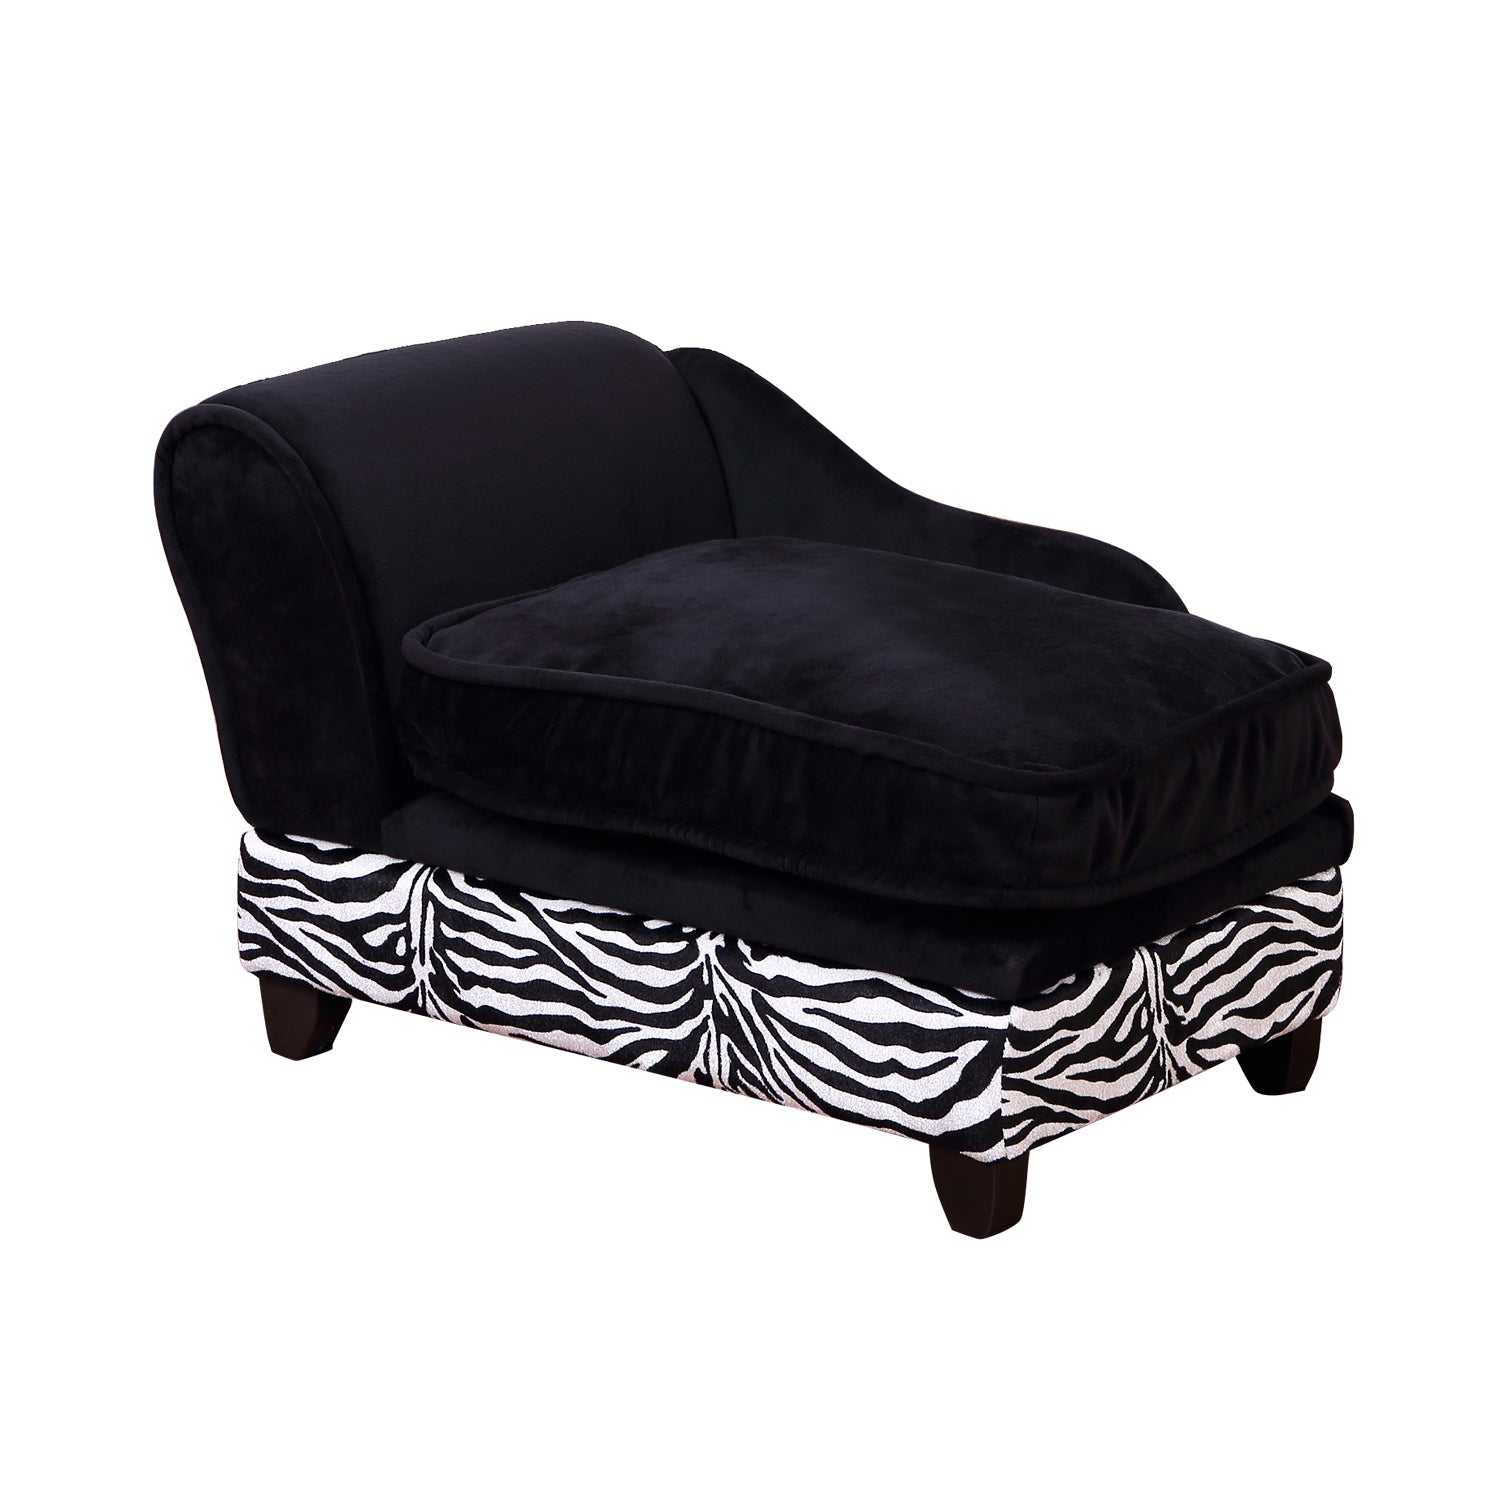 Fabric Pet Sofa, 57x34x36 cm-Black, Zebra-Stripe